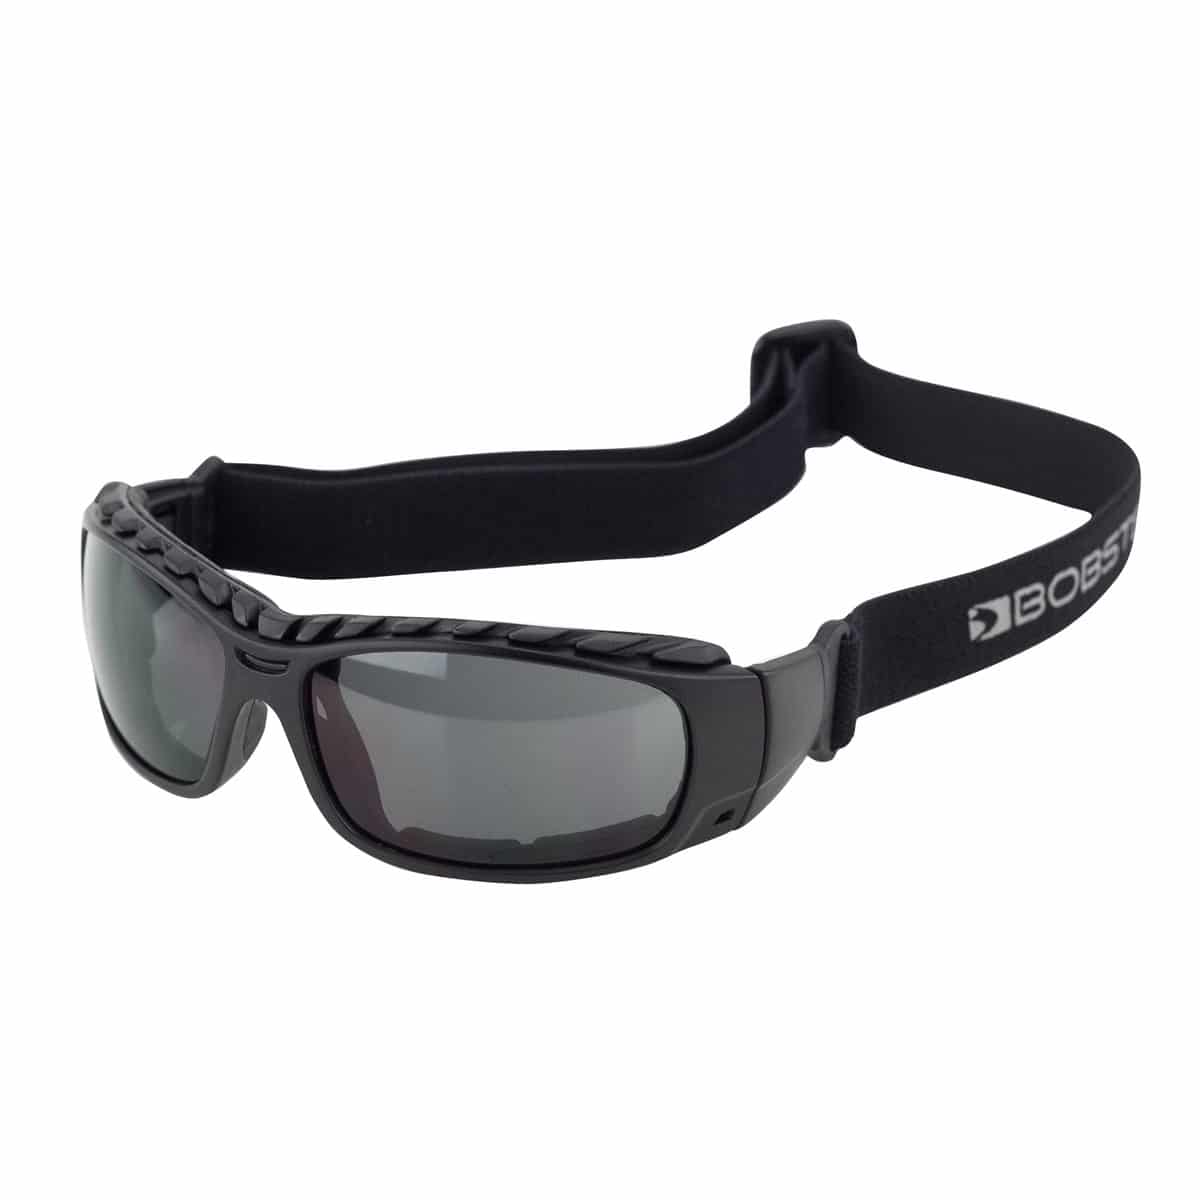 Bobster Ambush II Sunglasses - SafetyGearPro.com